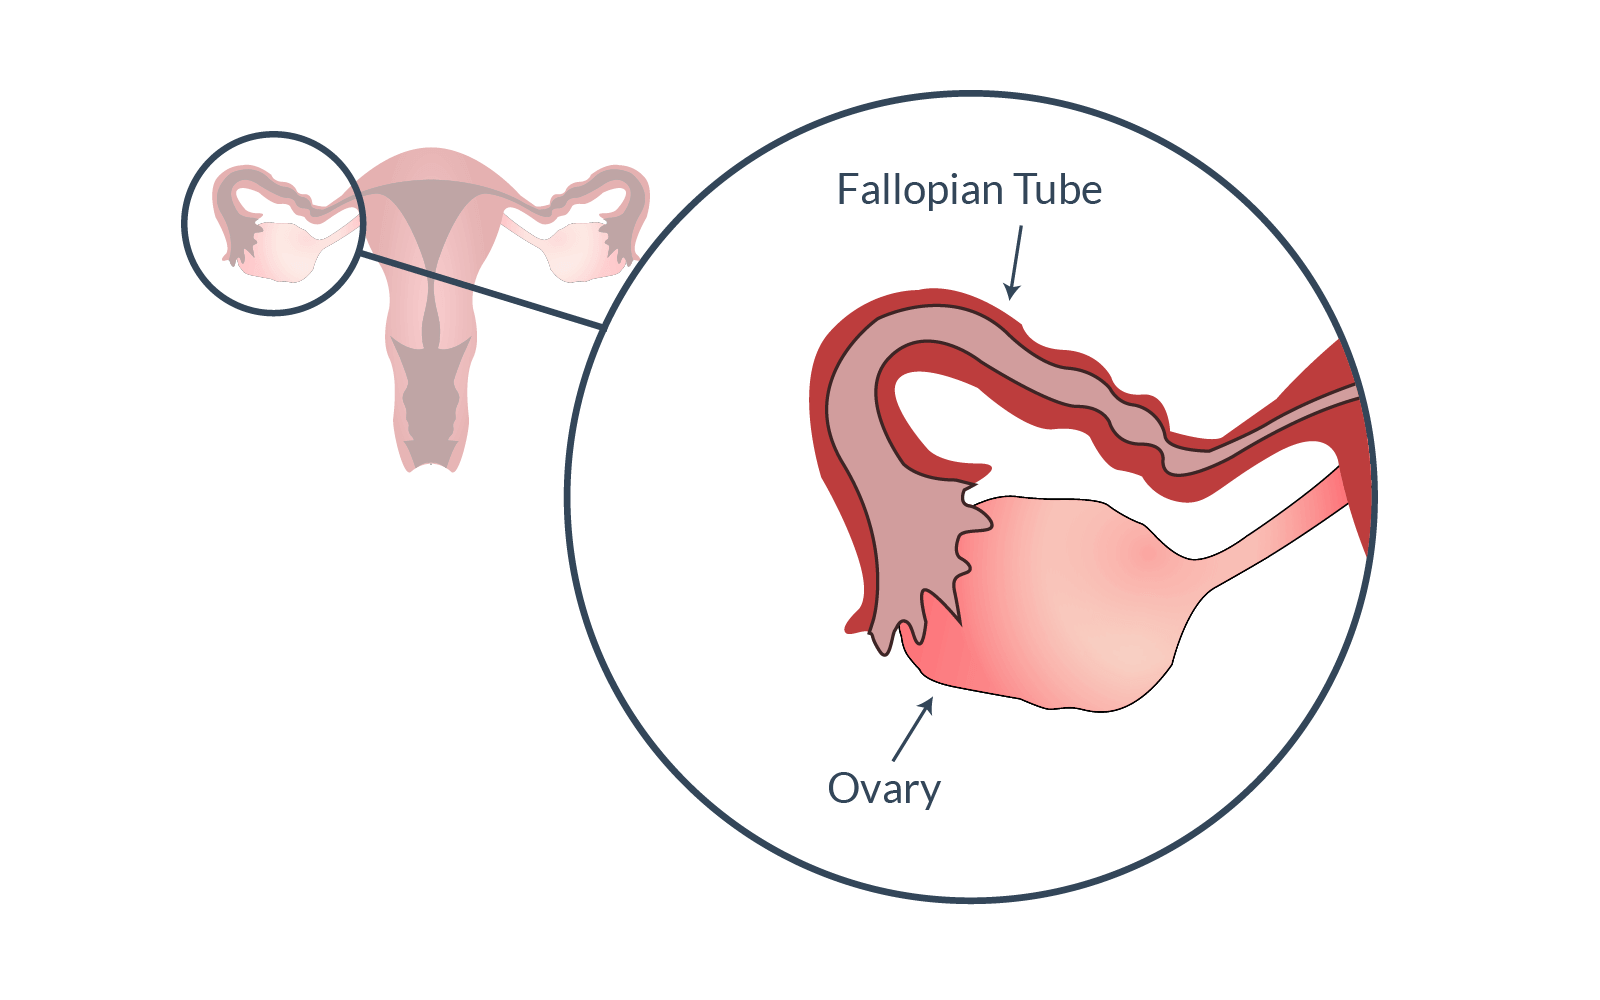 Fallopian tube and ovary